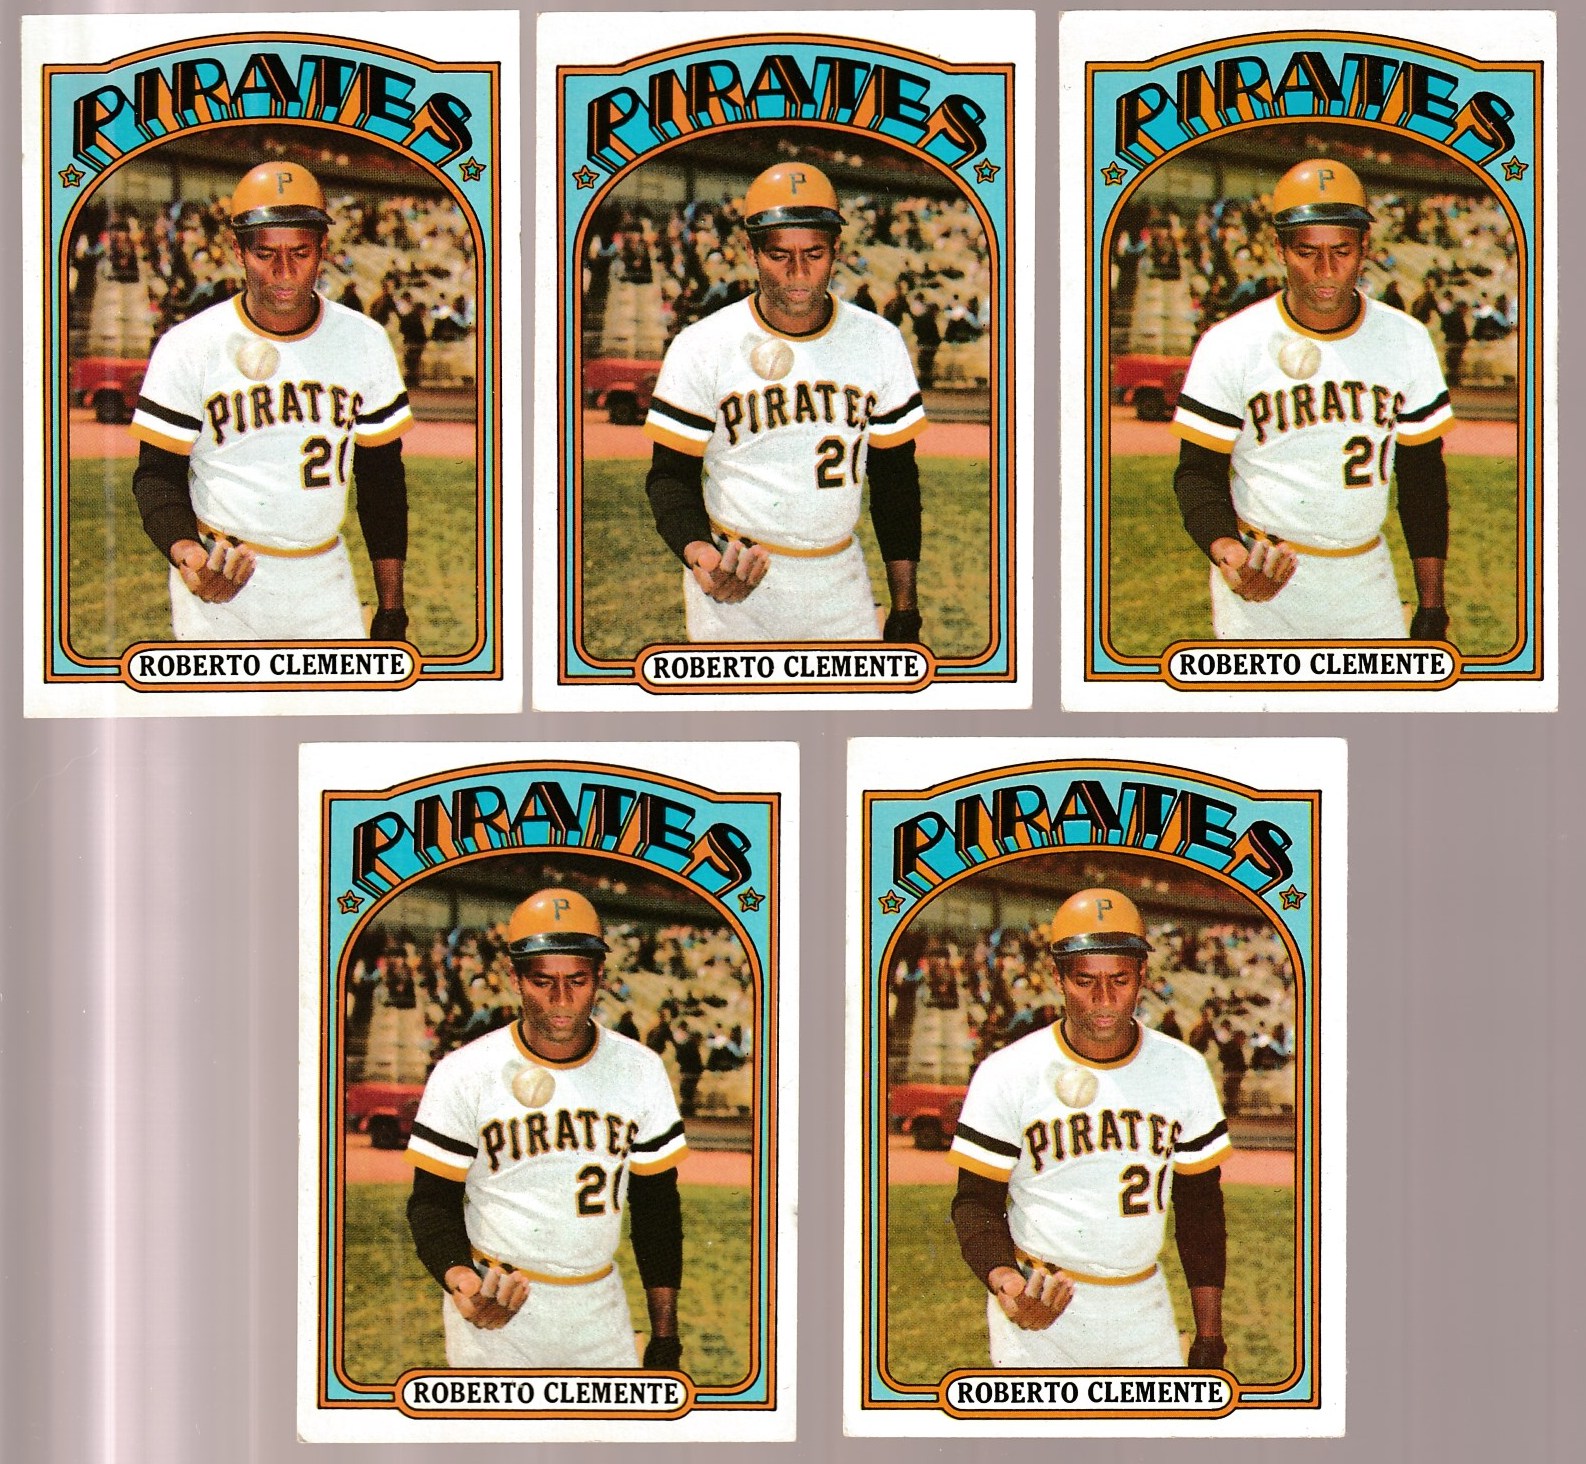 1972 Topps #309 Roberto Clemente (Pirates) Baseball cards value